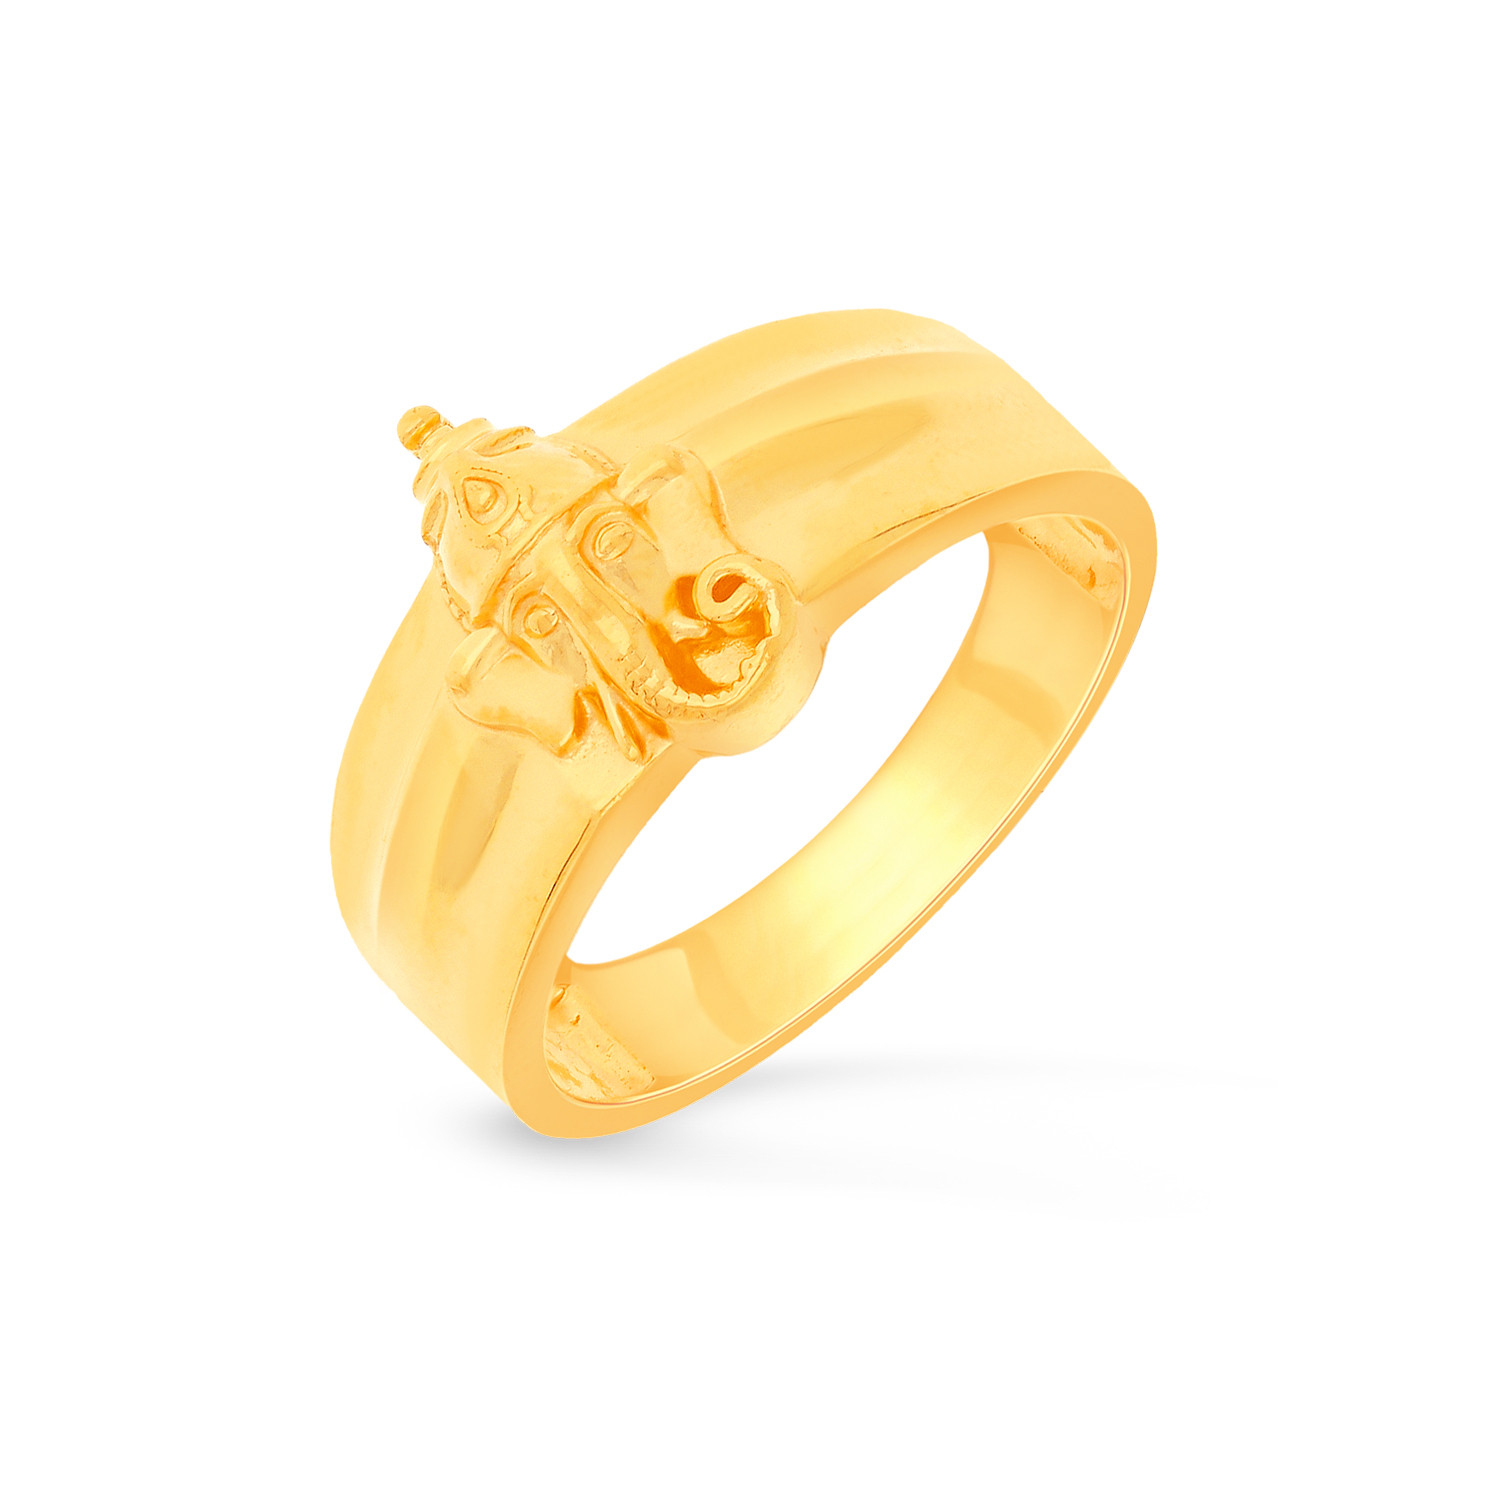 Buy Men's Gold Engagement Rings | Latest Engagement Ring Designs